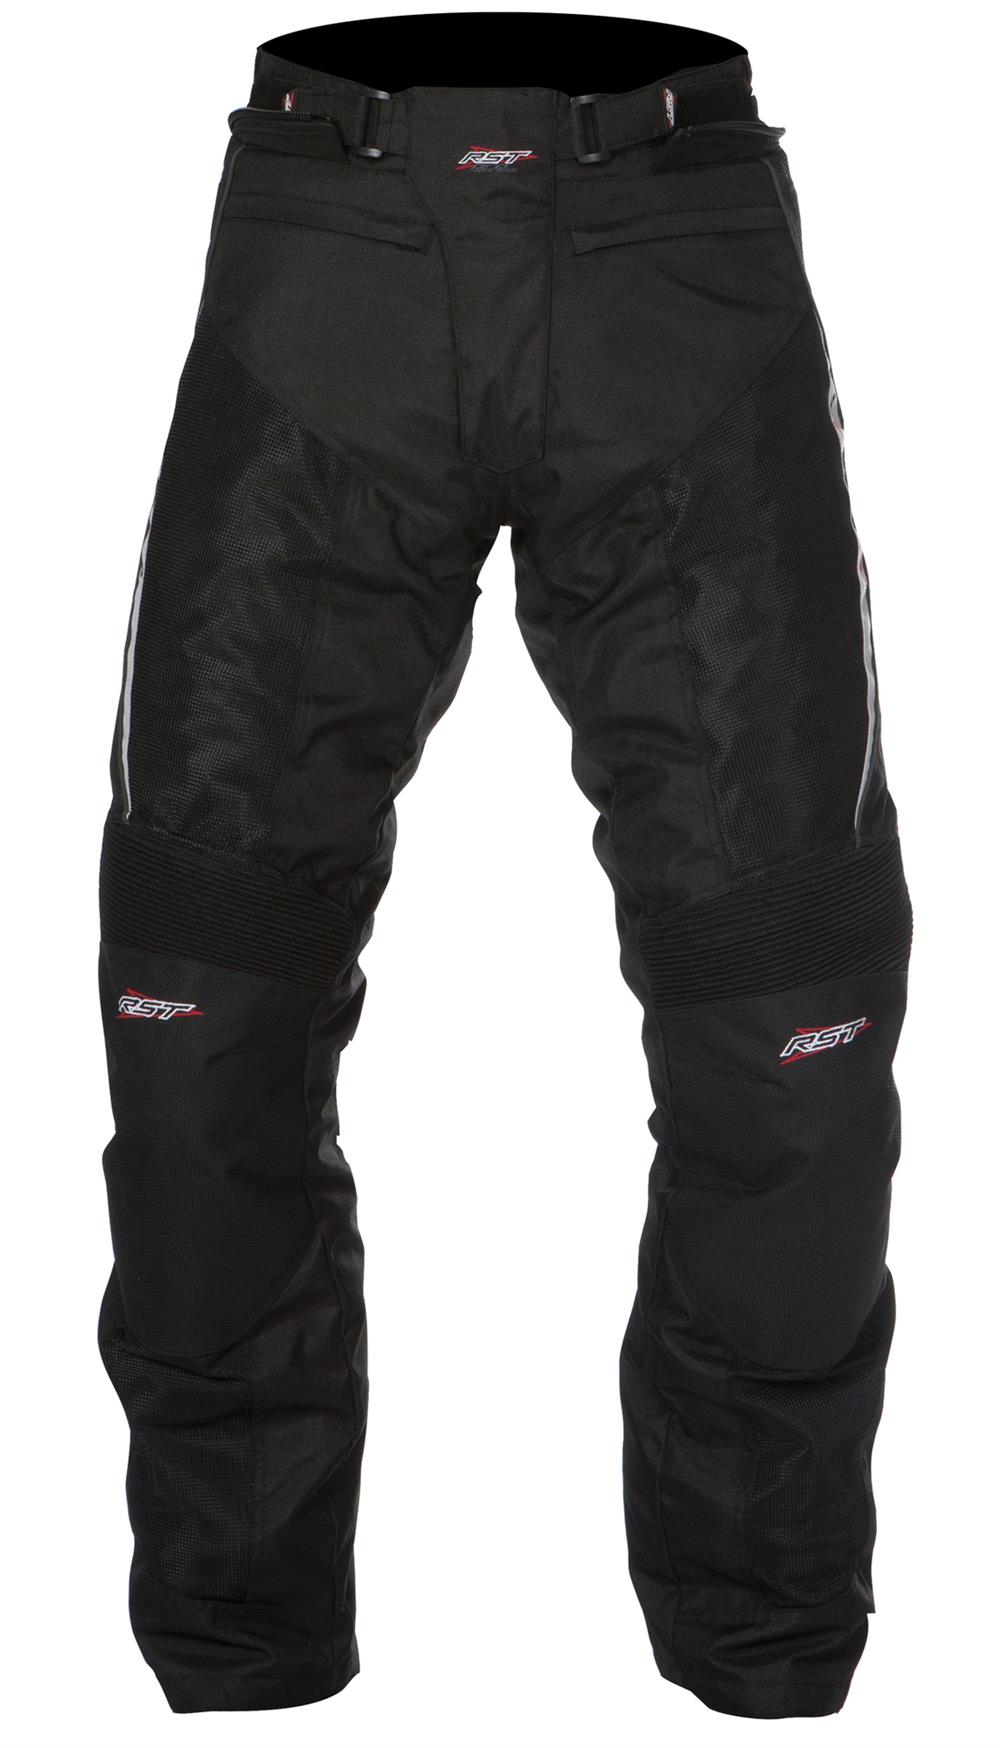 rst-ladies-ventilator-3-pants-size-203xl-black